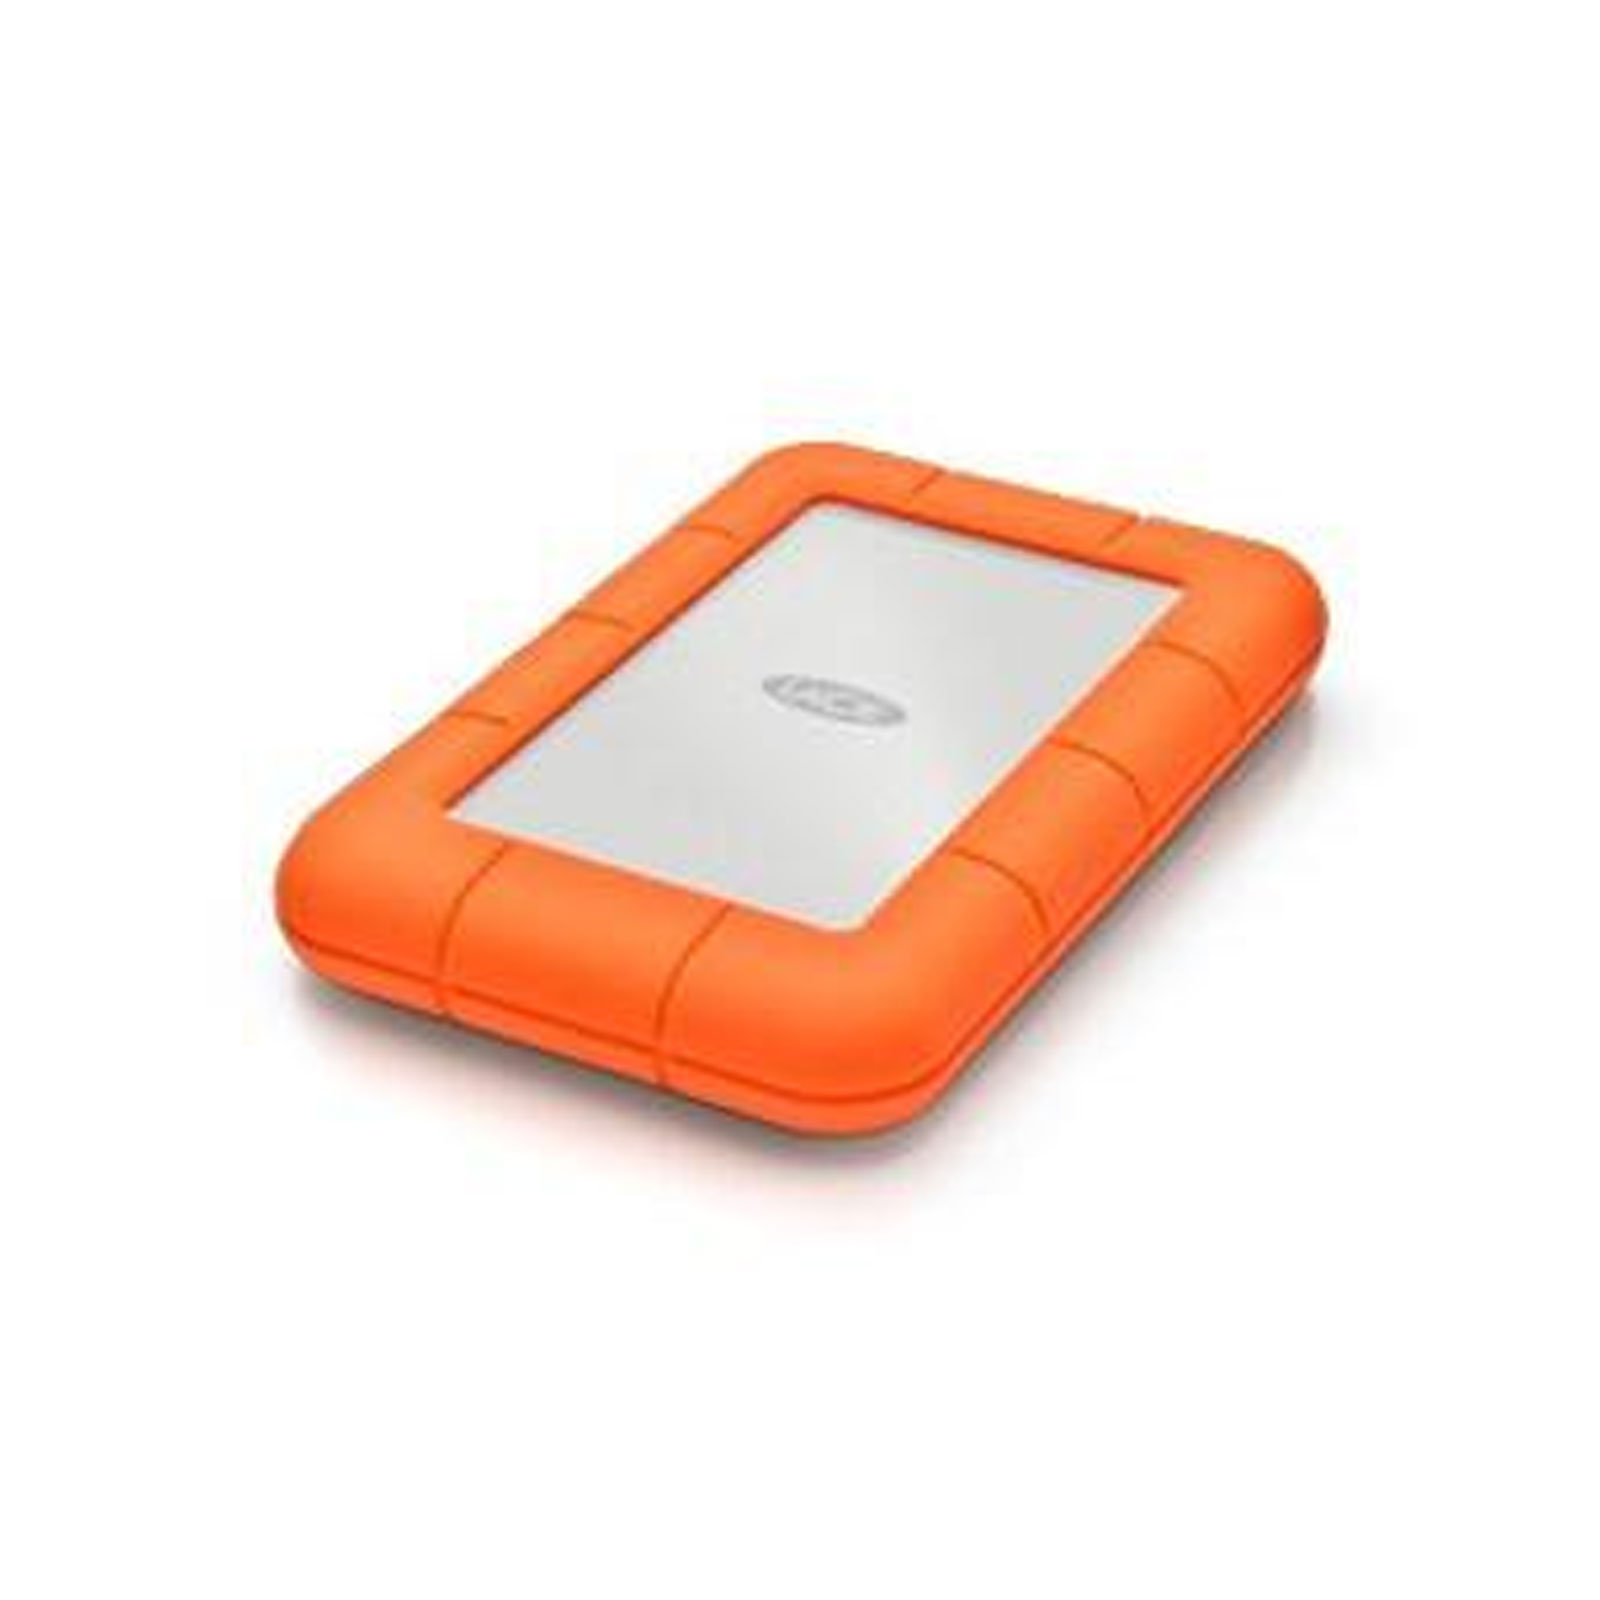 LACIE Rugged Mini, HDD, 4 TB, orange Externe HDD-Festplatte